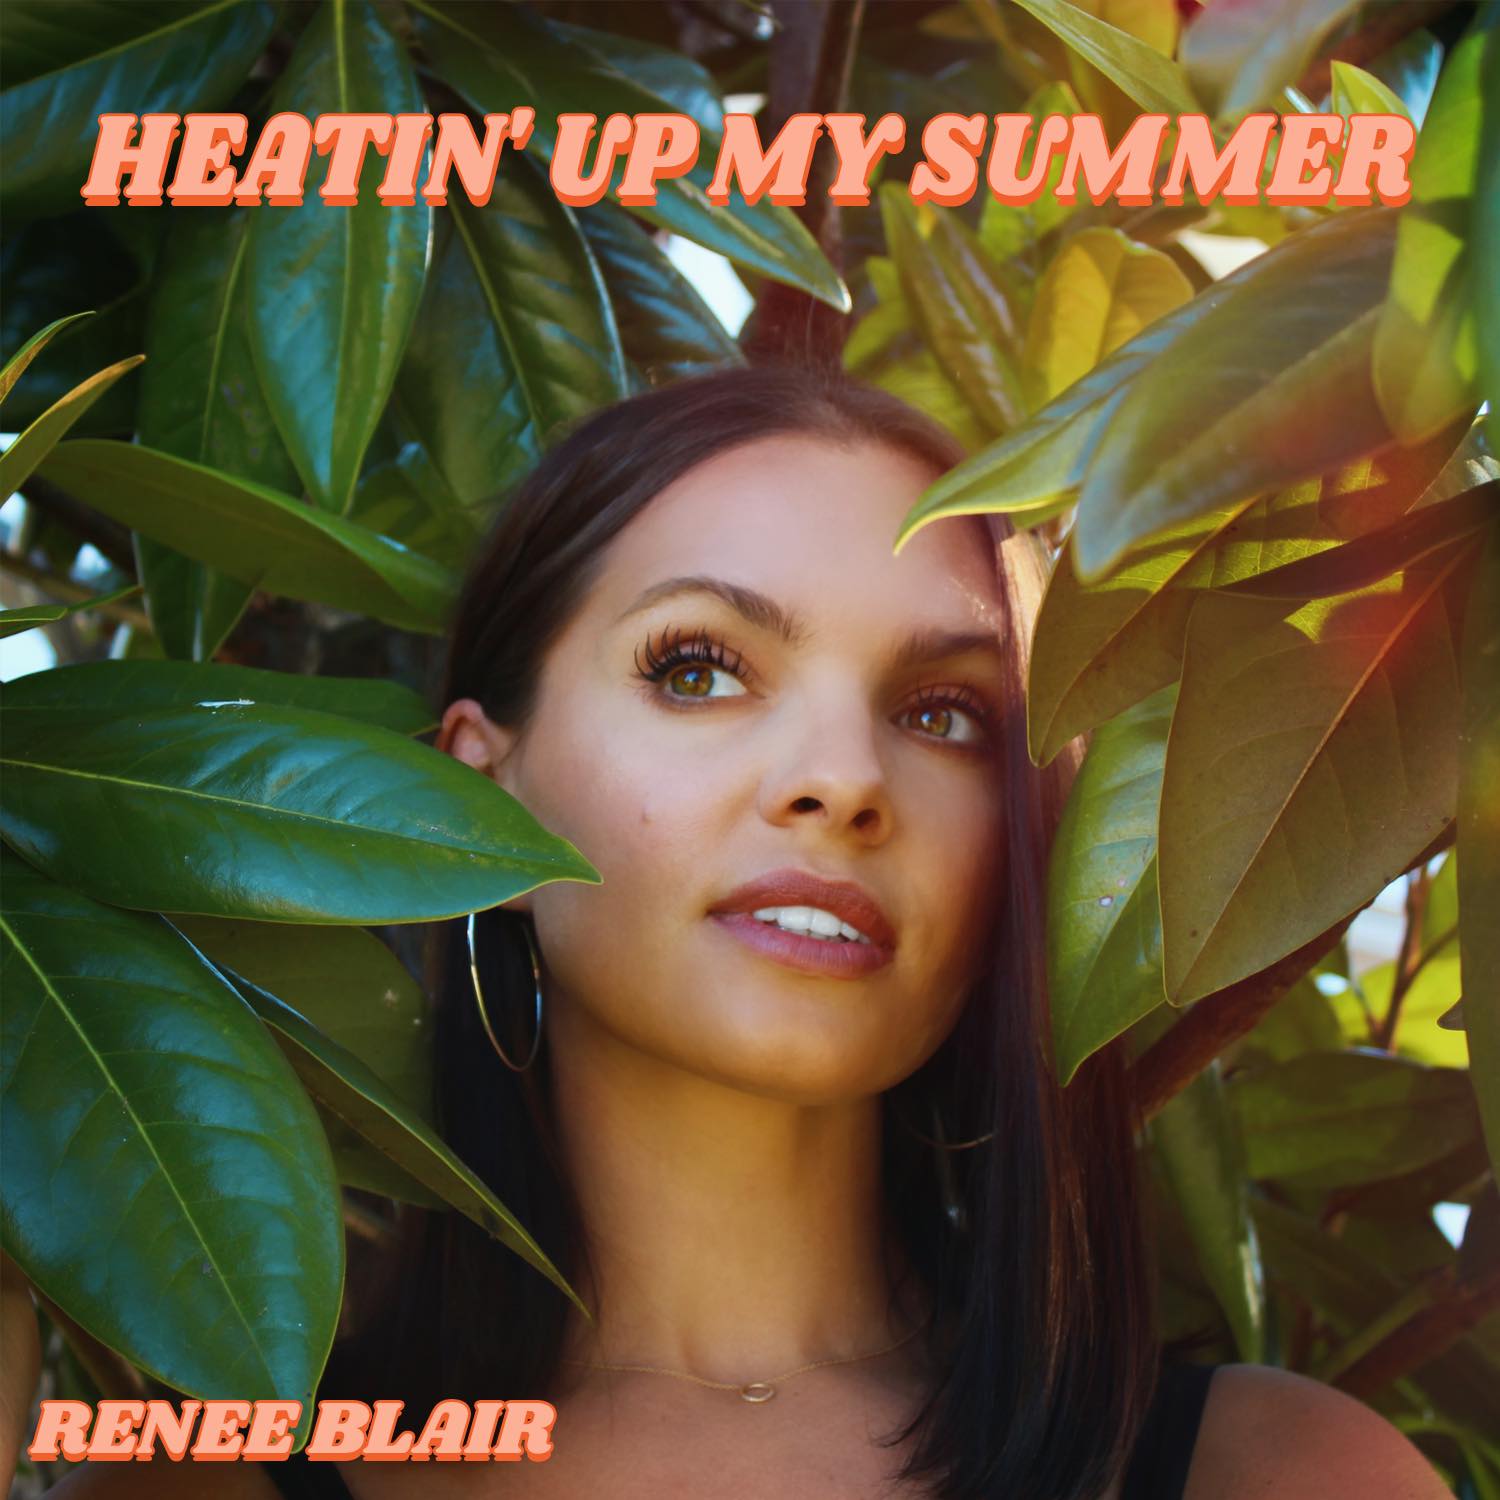 Heatin' Up my Summer Renee Blair